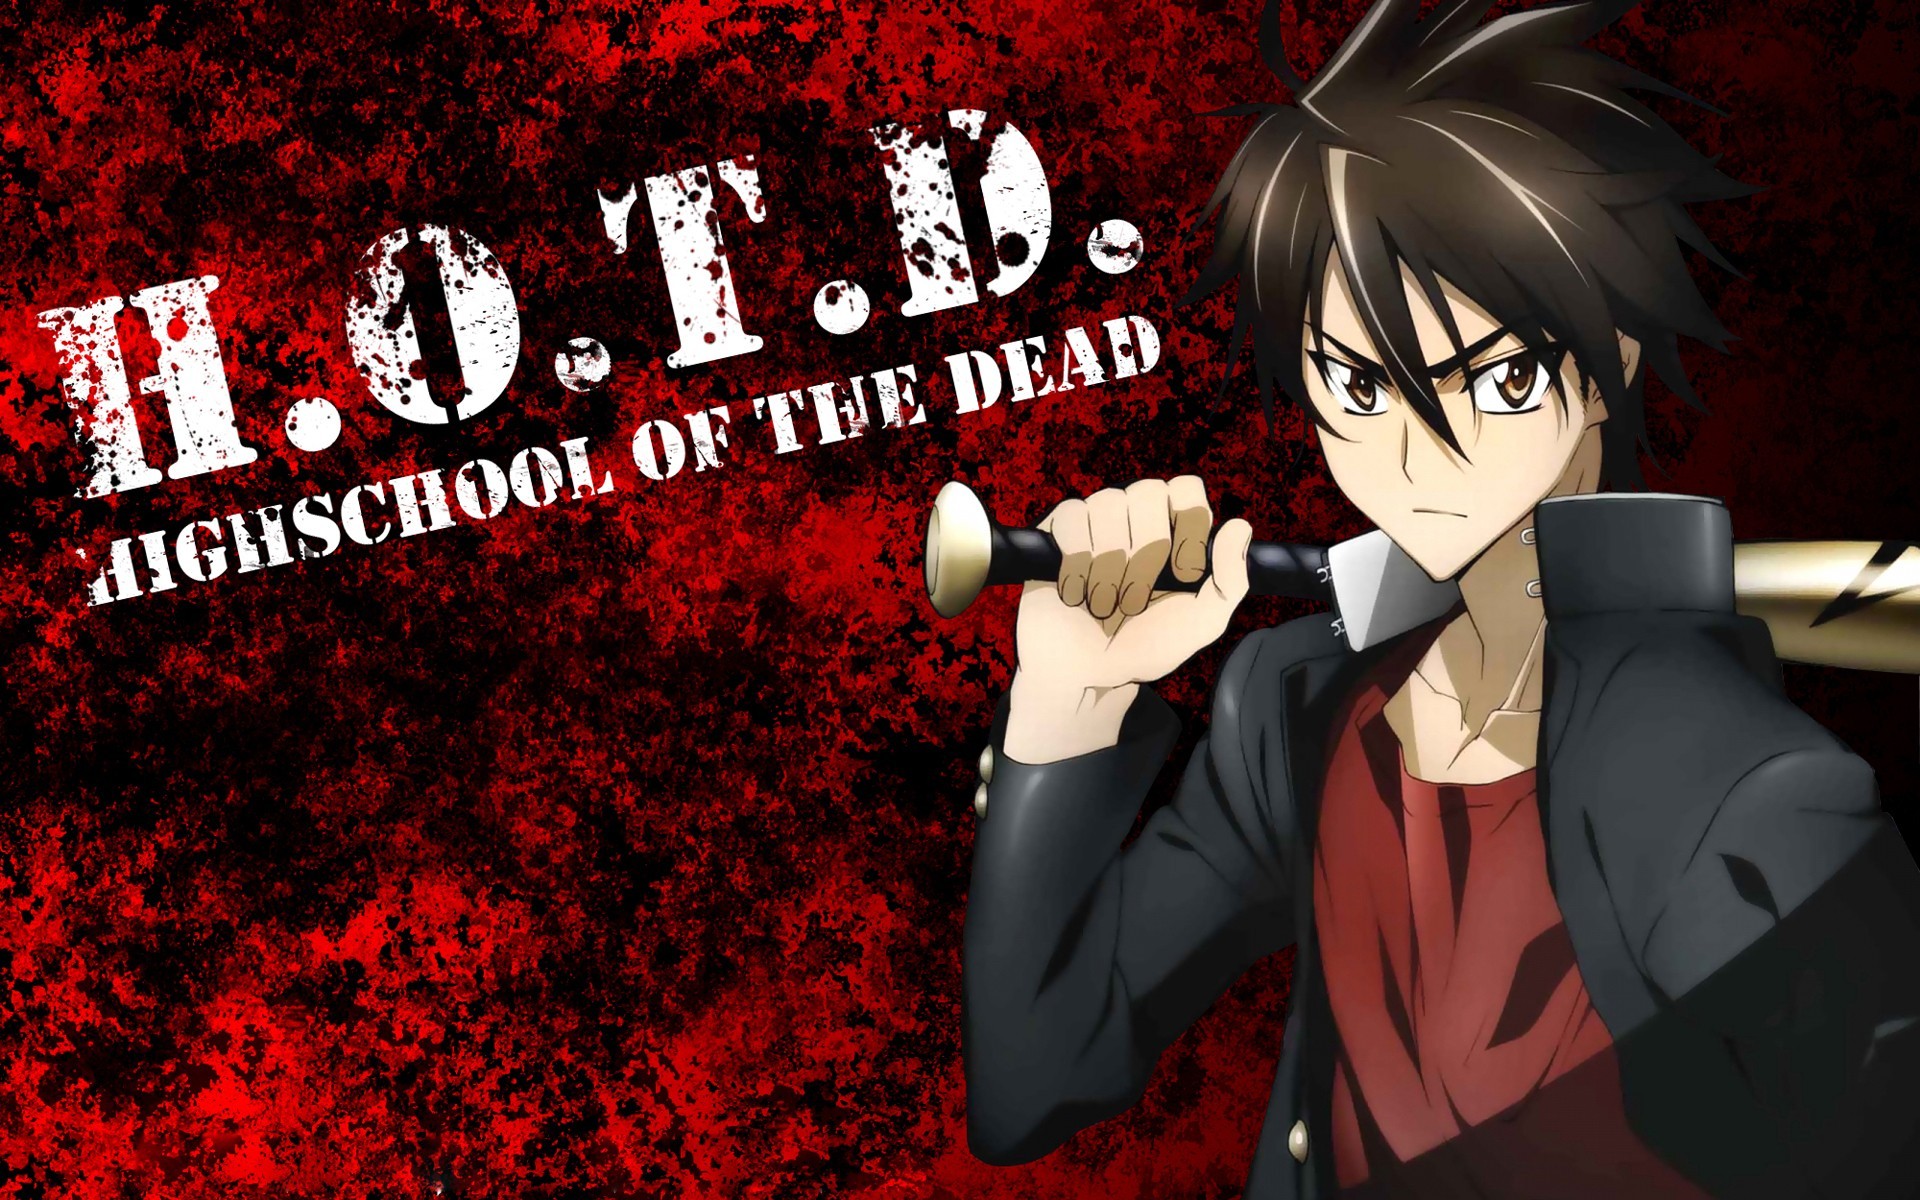 Highschool of the Dead, Komuro Takashi - desktop wallpaper